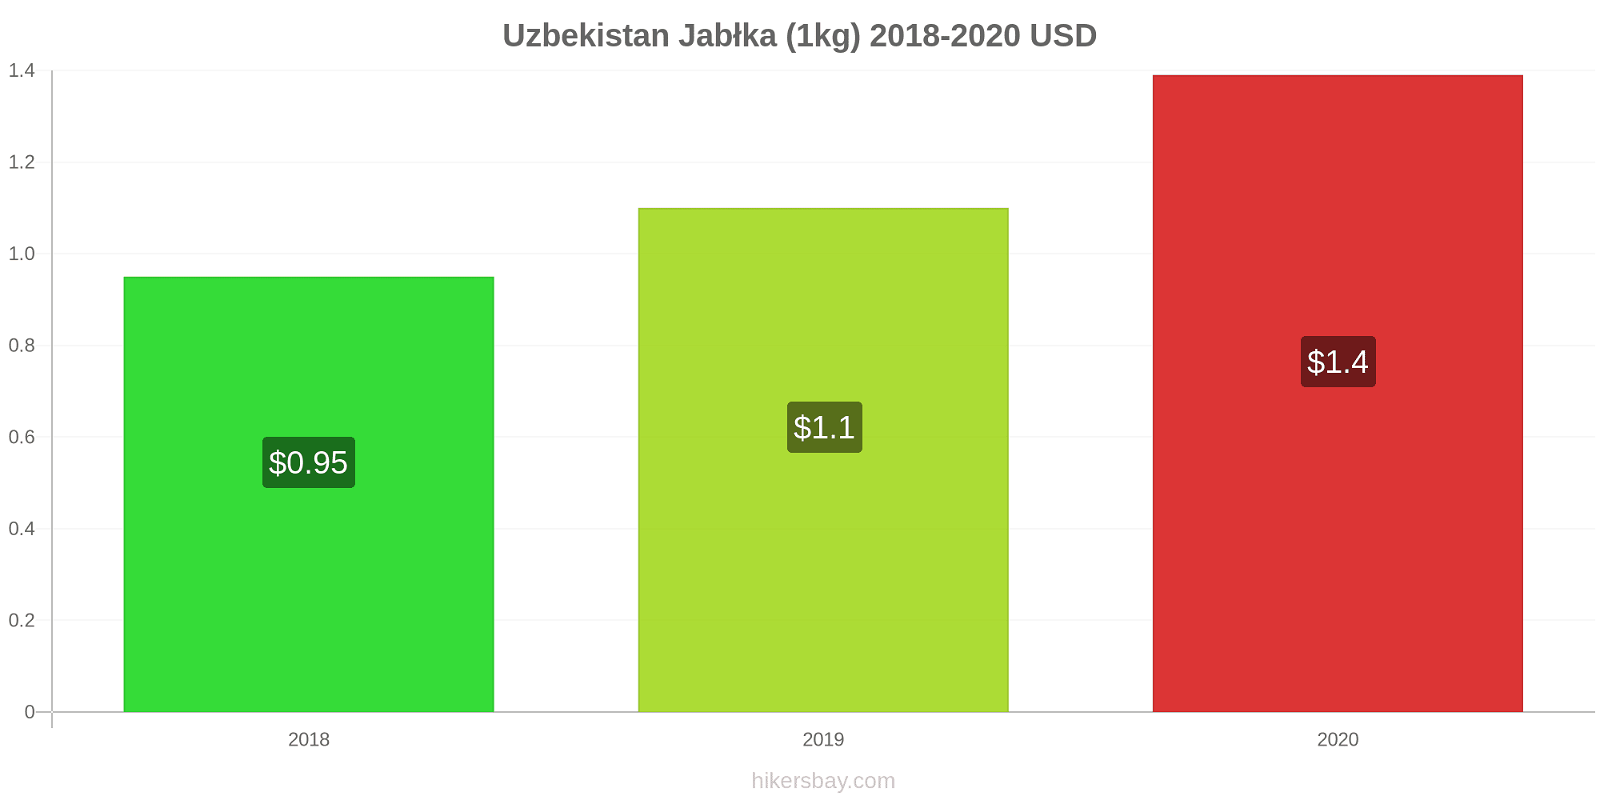 Uzbekistan zmiany cen Jabłka (1kg) hikersbay.com